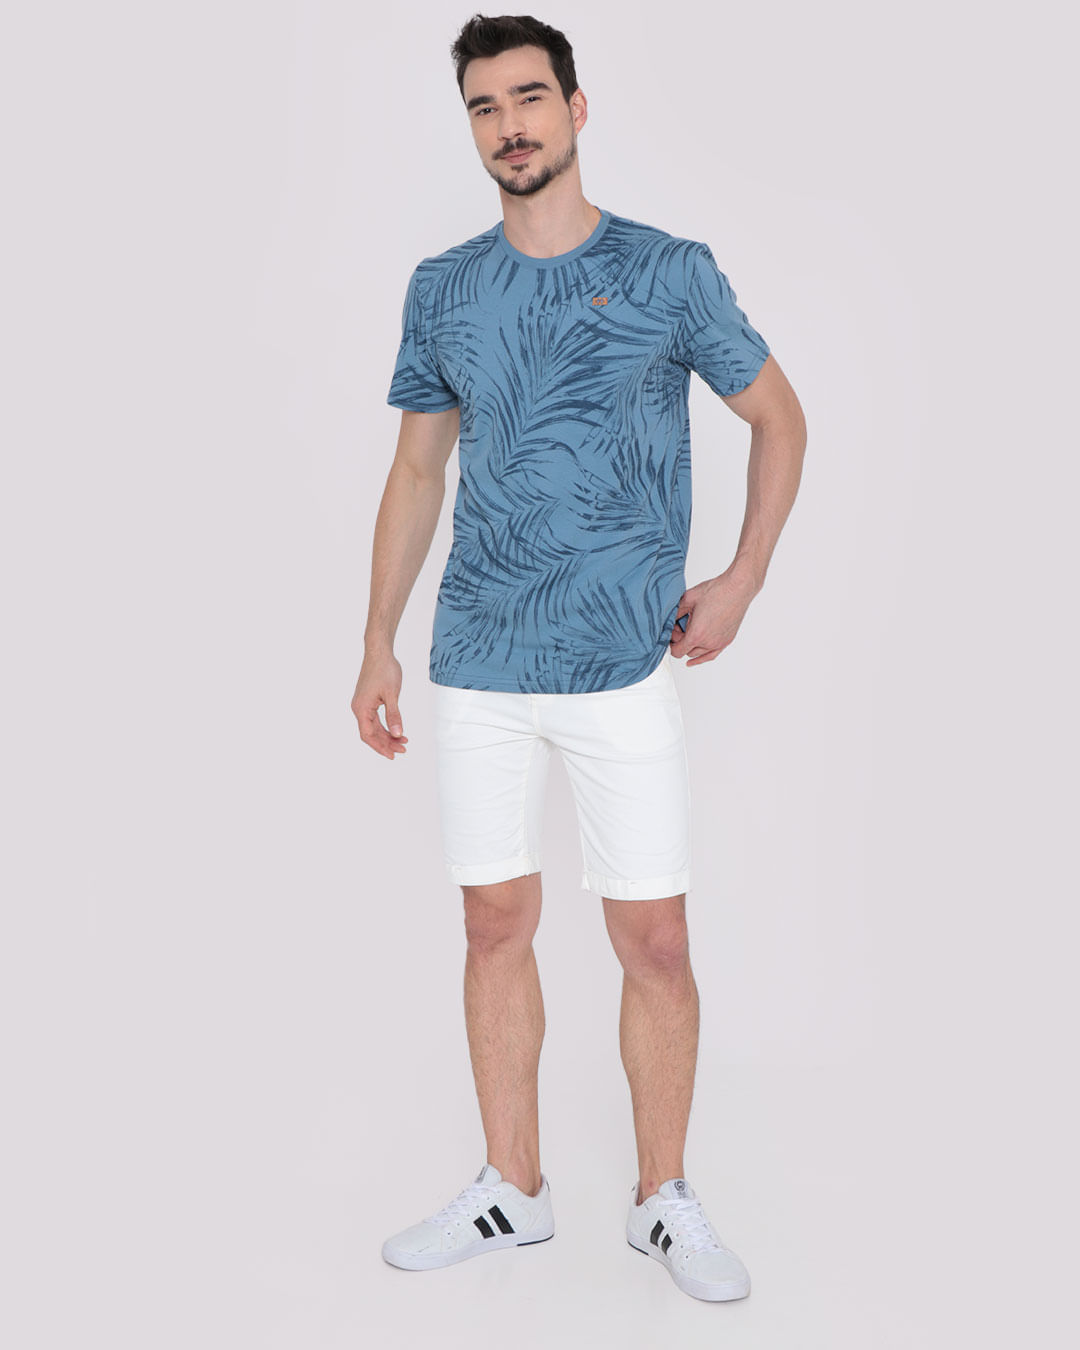 Camiseta-Masculina-Estampa-Tropical-Azul-Medio